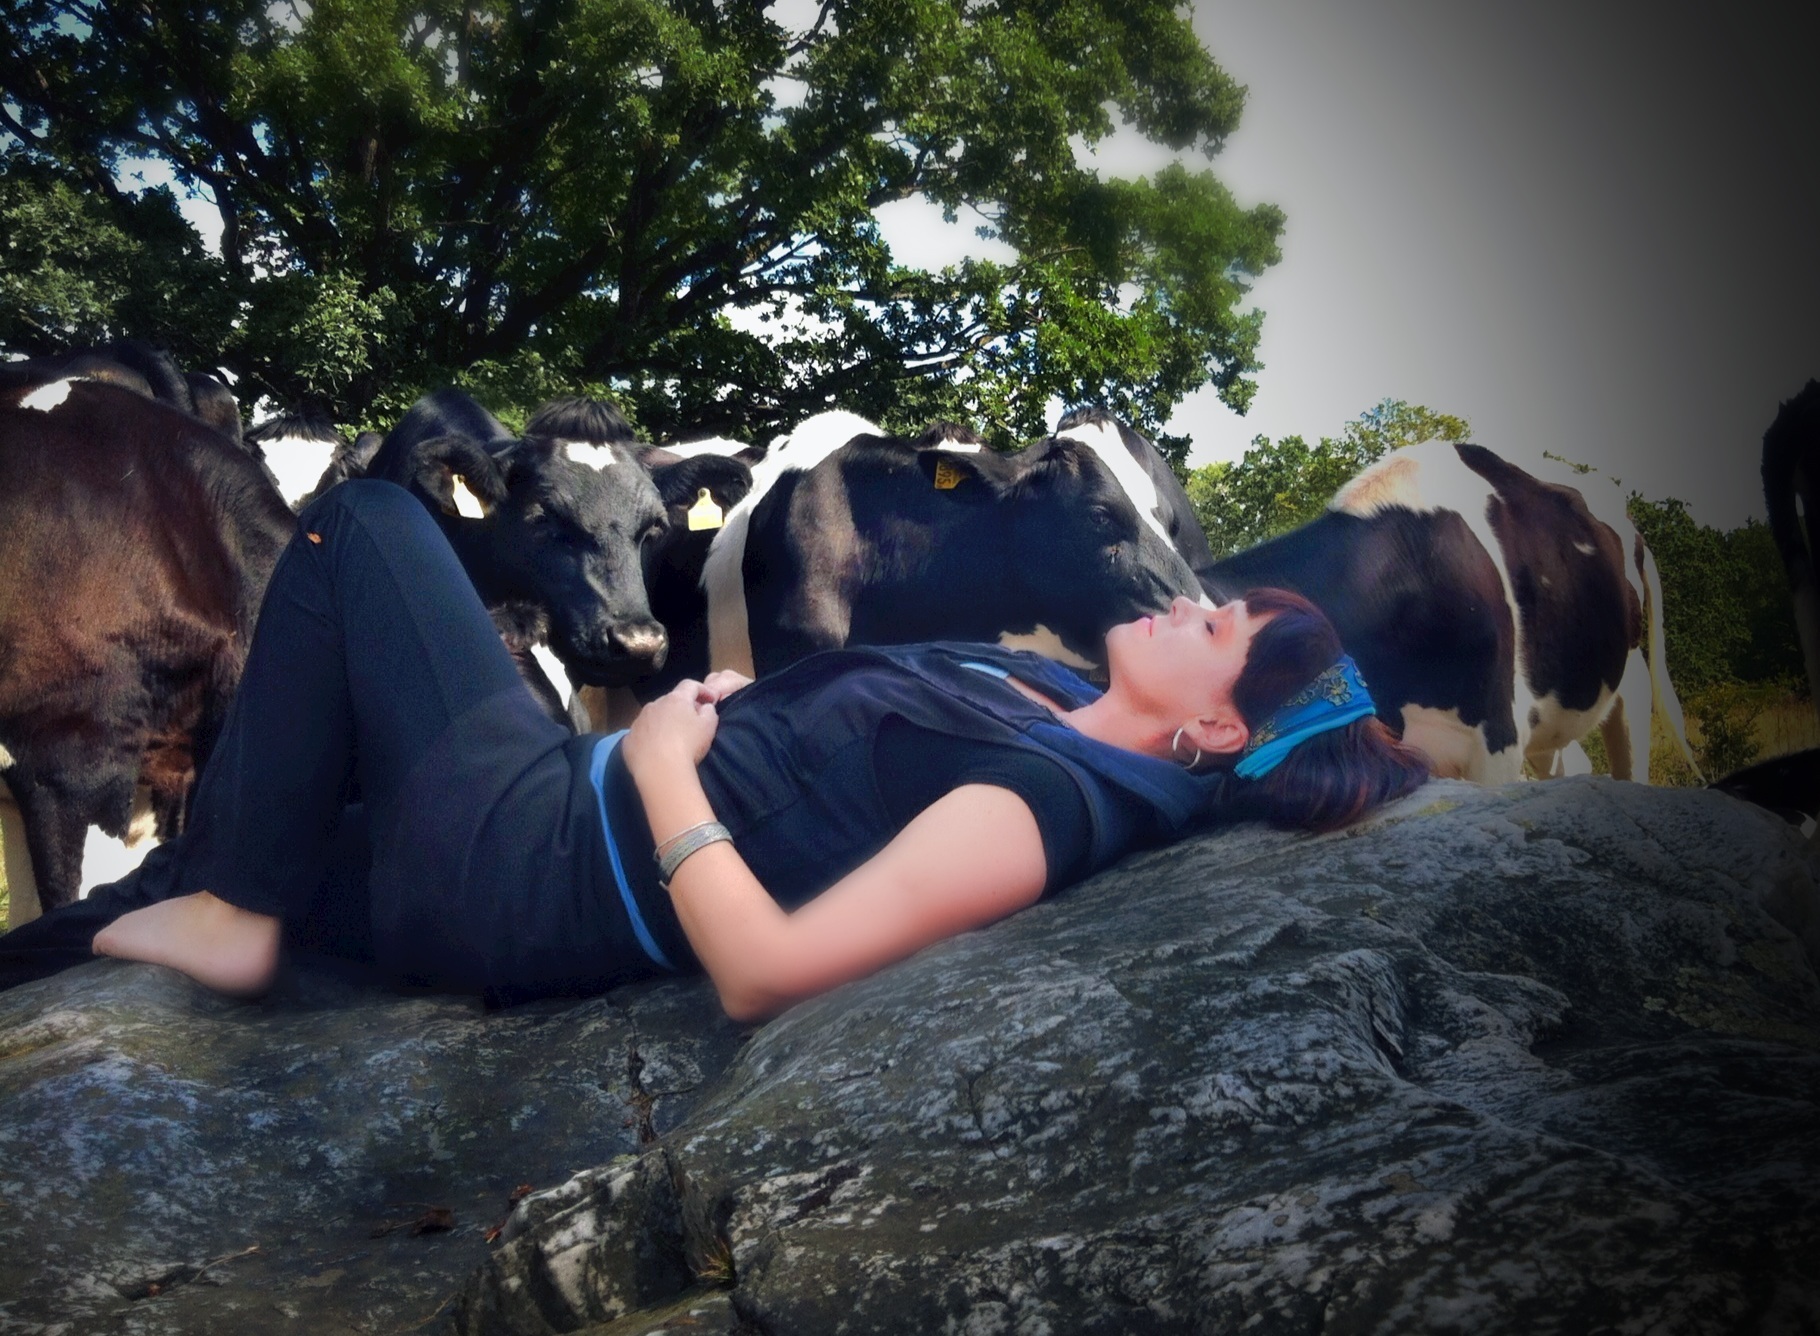 Sleeping among the cows